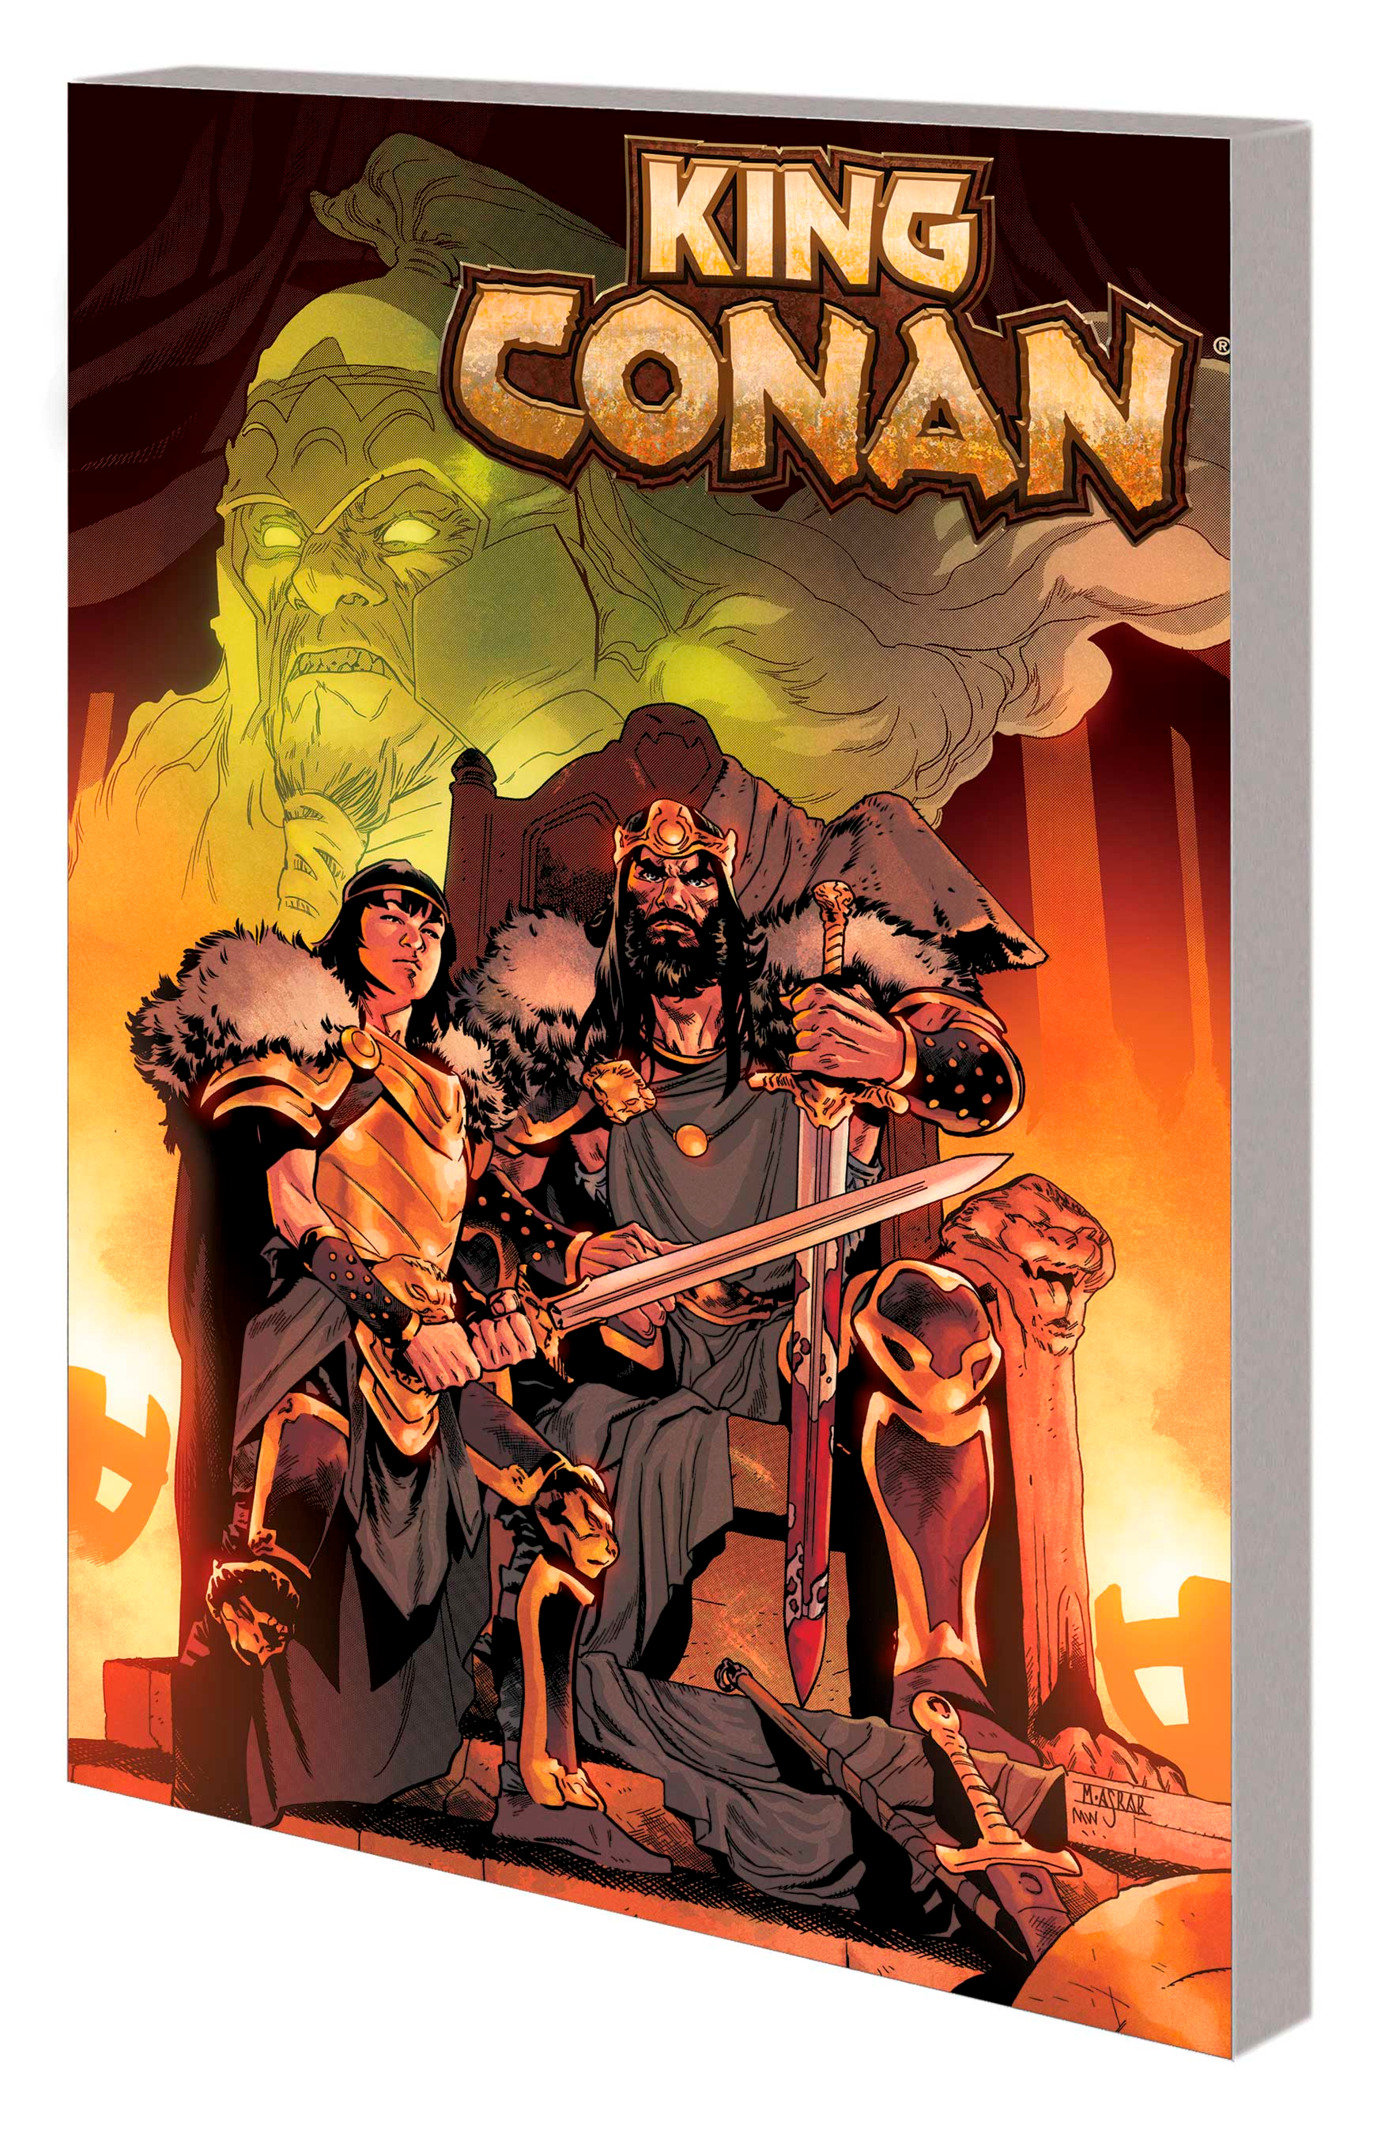 King Conan Graphic Novel